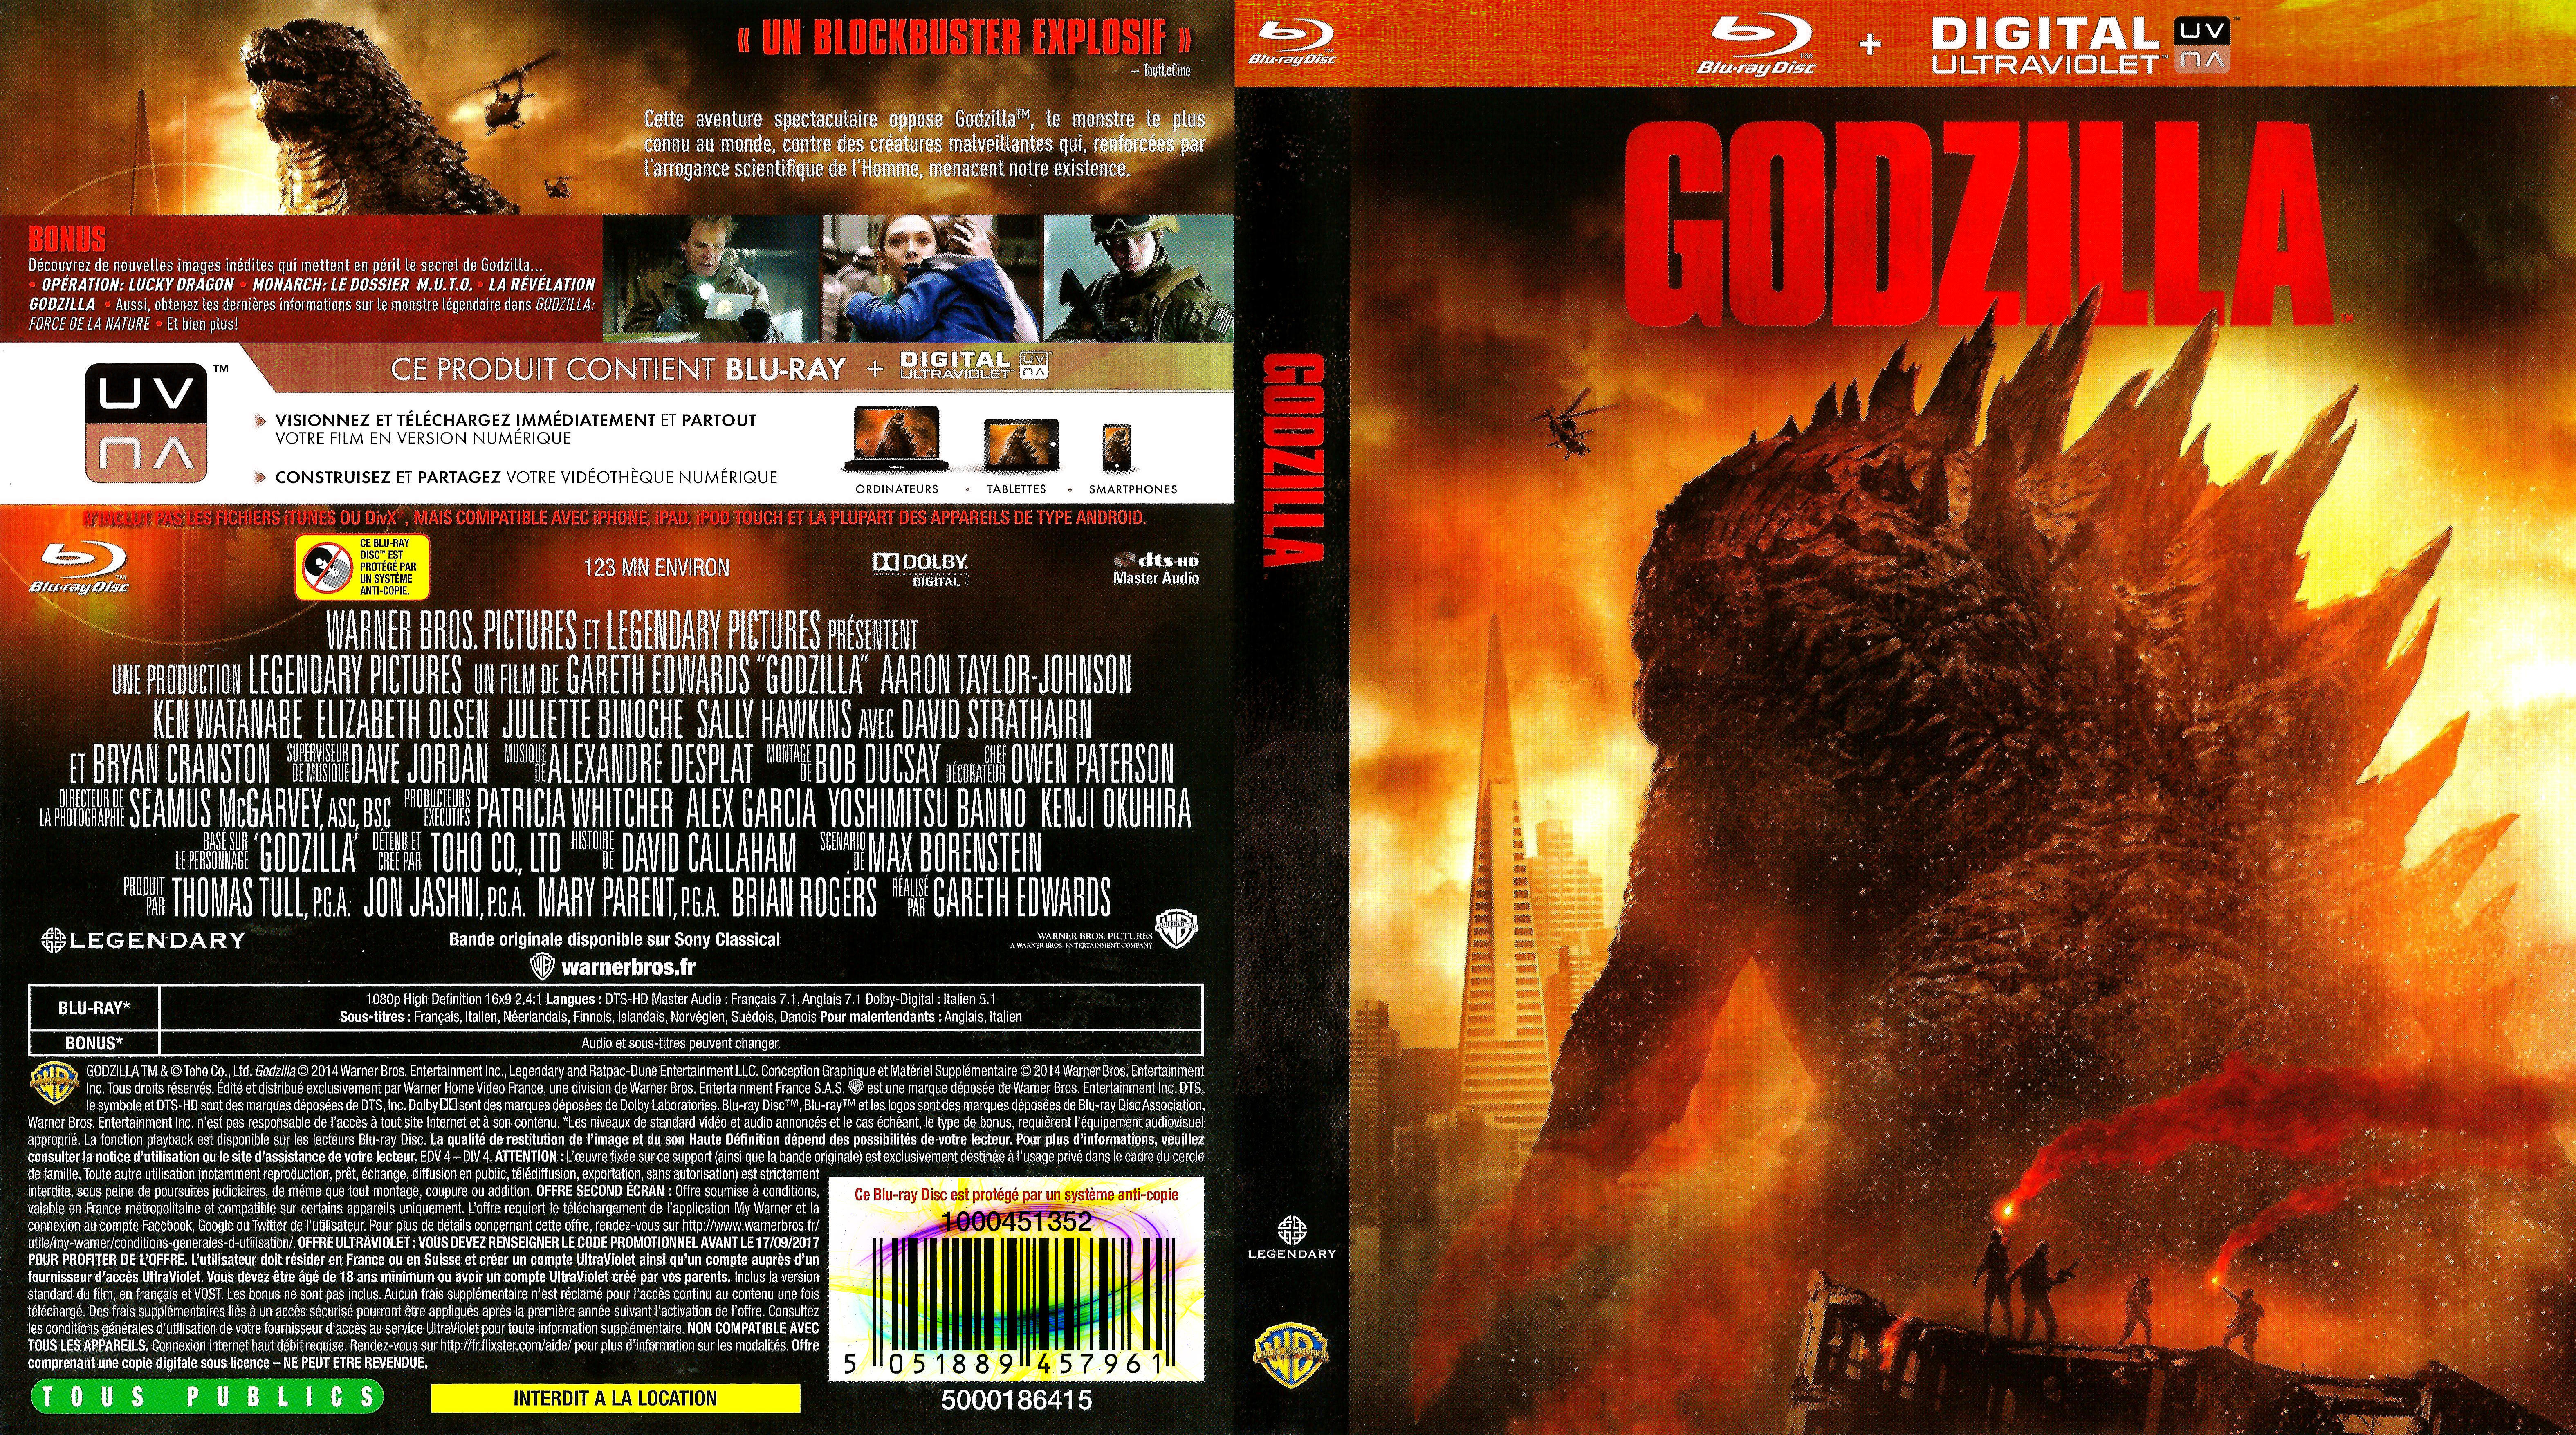 Jaquette DVD Godzilla (2014) (BLU-RAY) v2